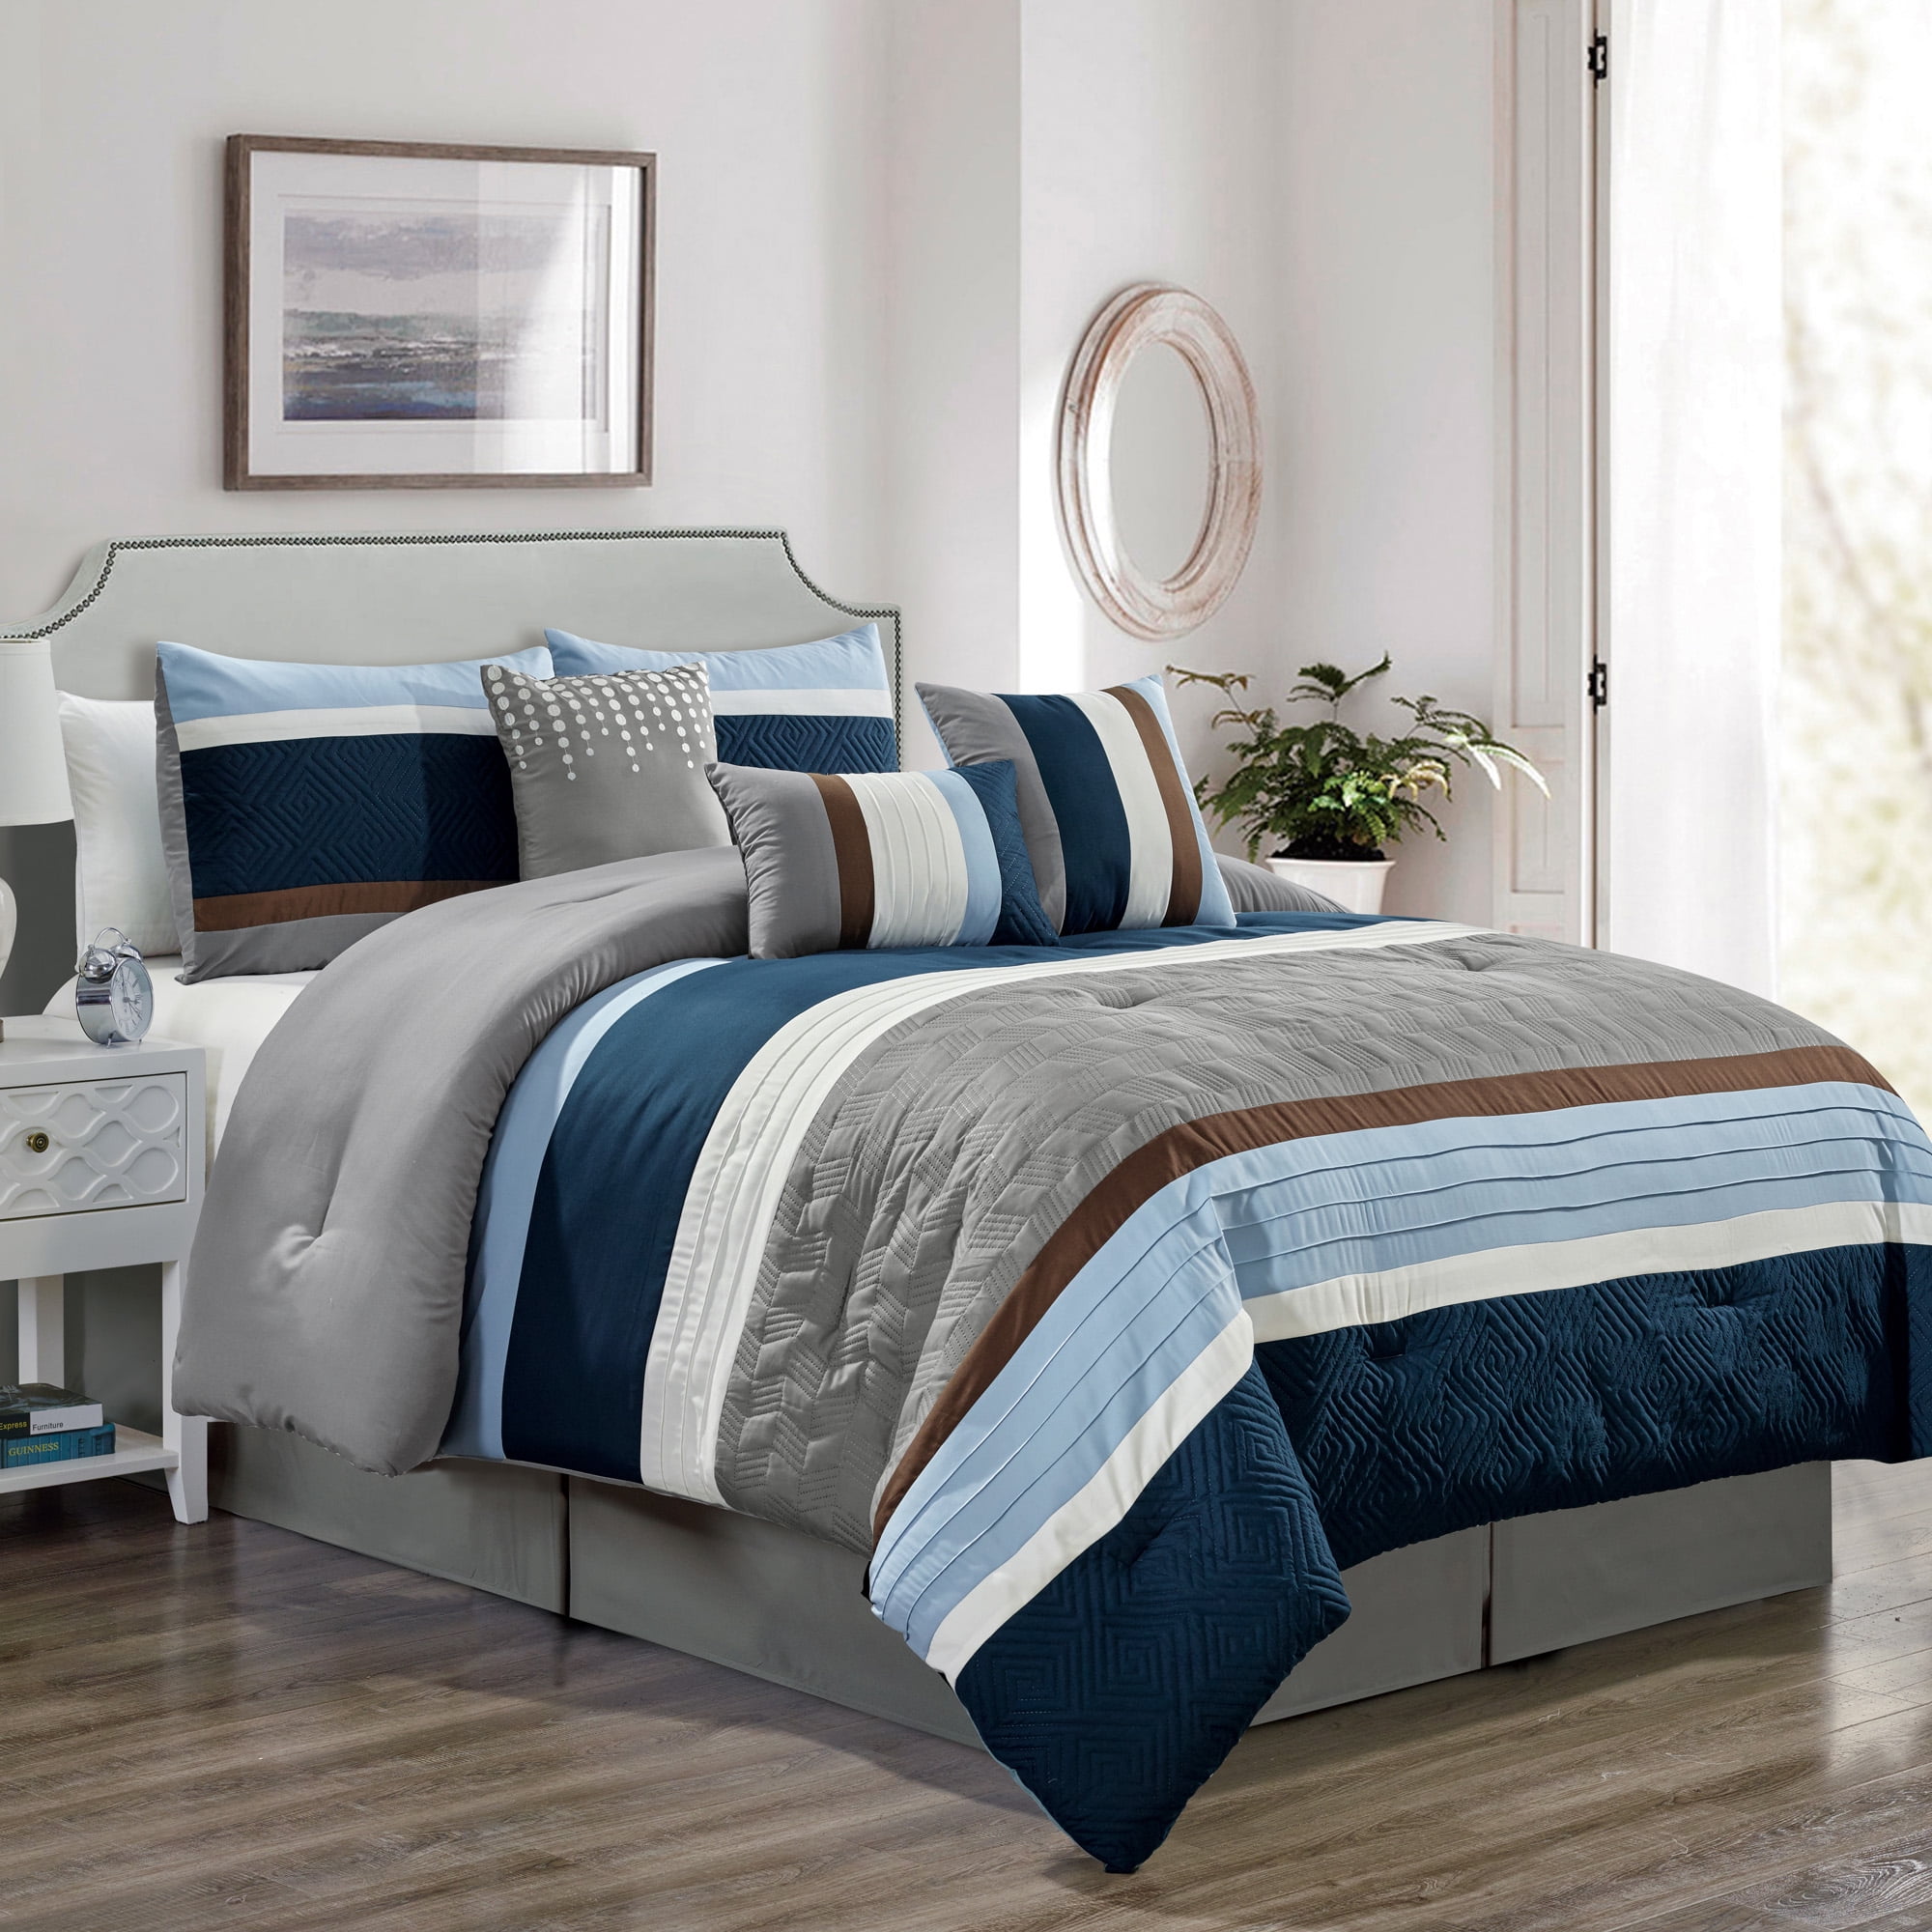 HGMart Bedding Comforter Set Bed In A Bag - 7 Piece Luxury Striped